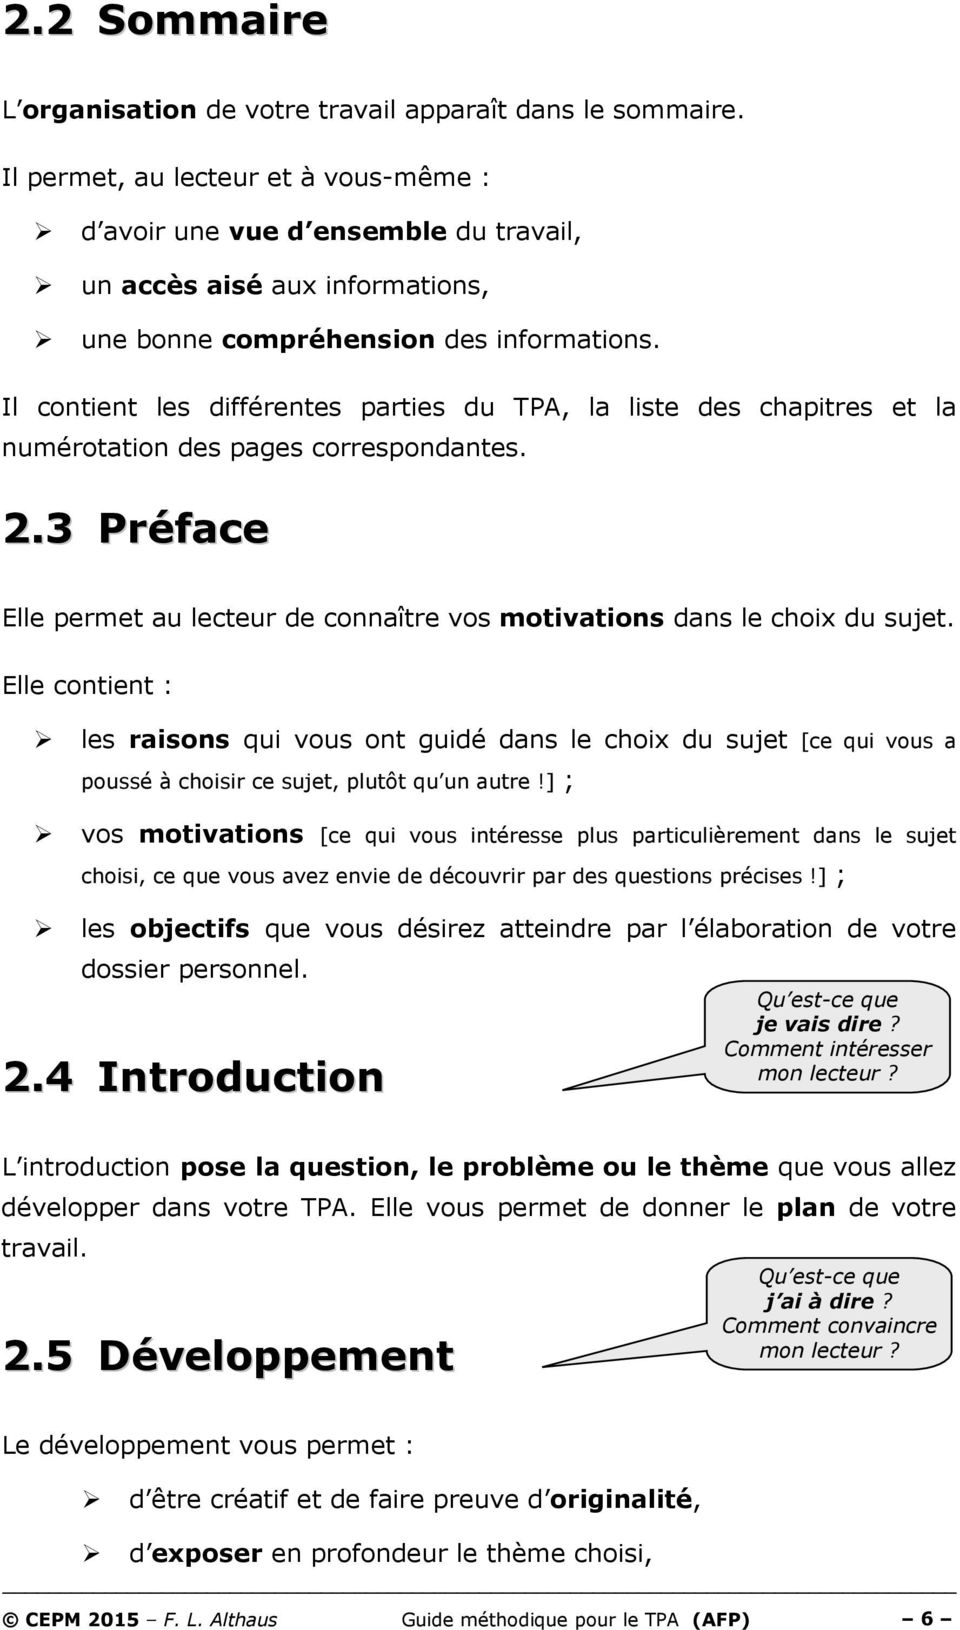 AFP. François Laurent ALTHAUS Maître principal CG (MPCG) - PDF Free Download